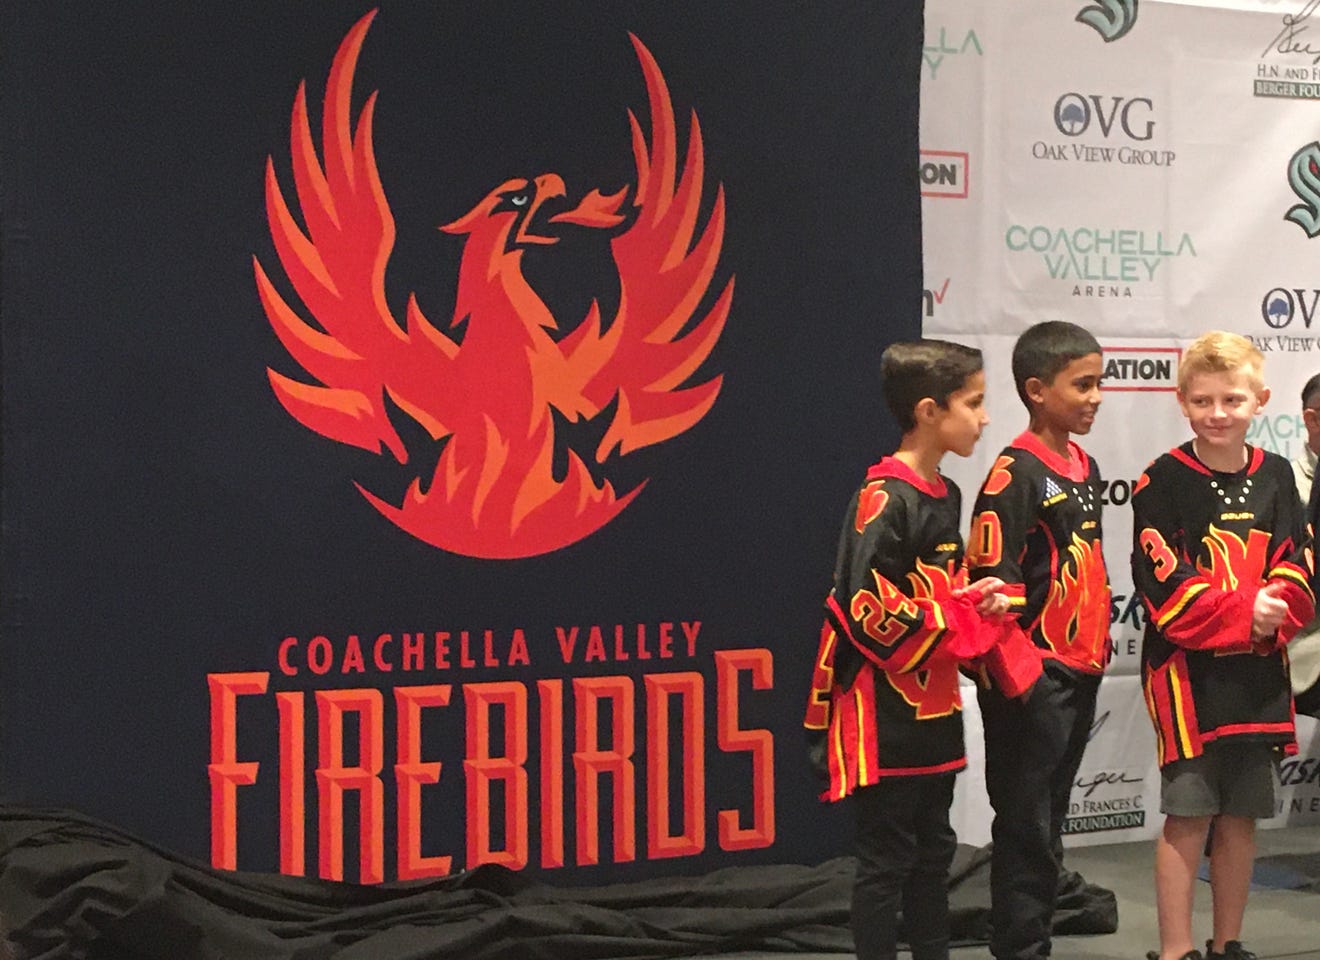 Coachella Valley Firebirds New hockey team name, logo, colors revealed